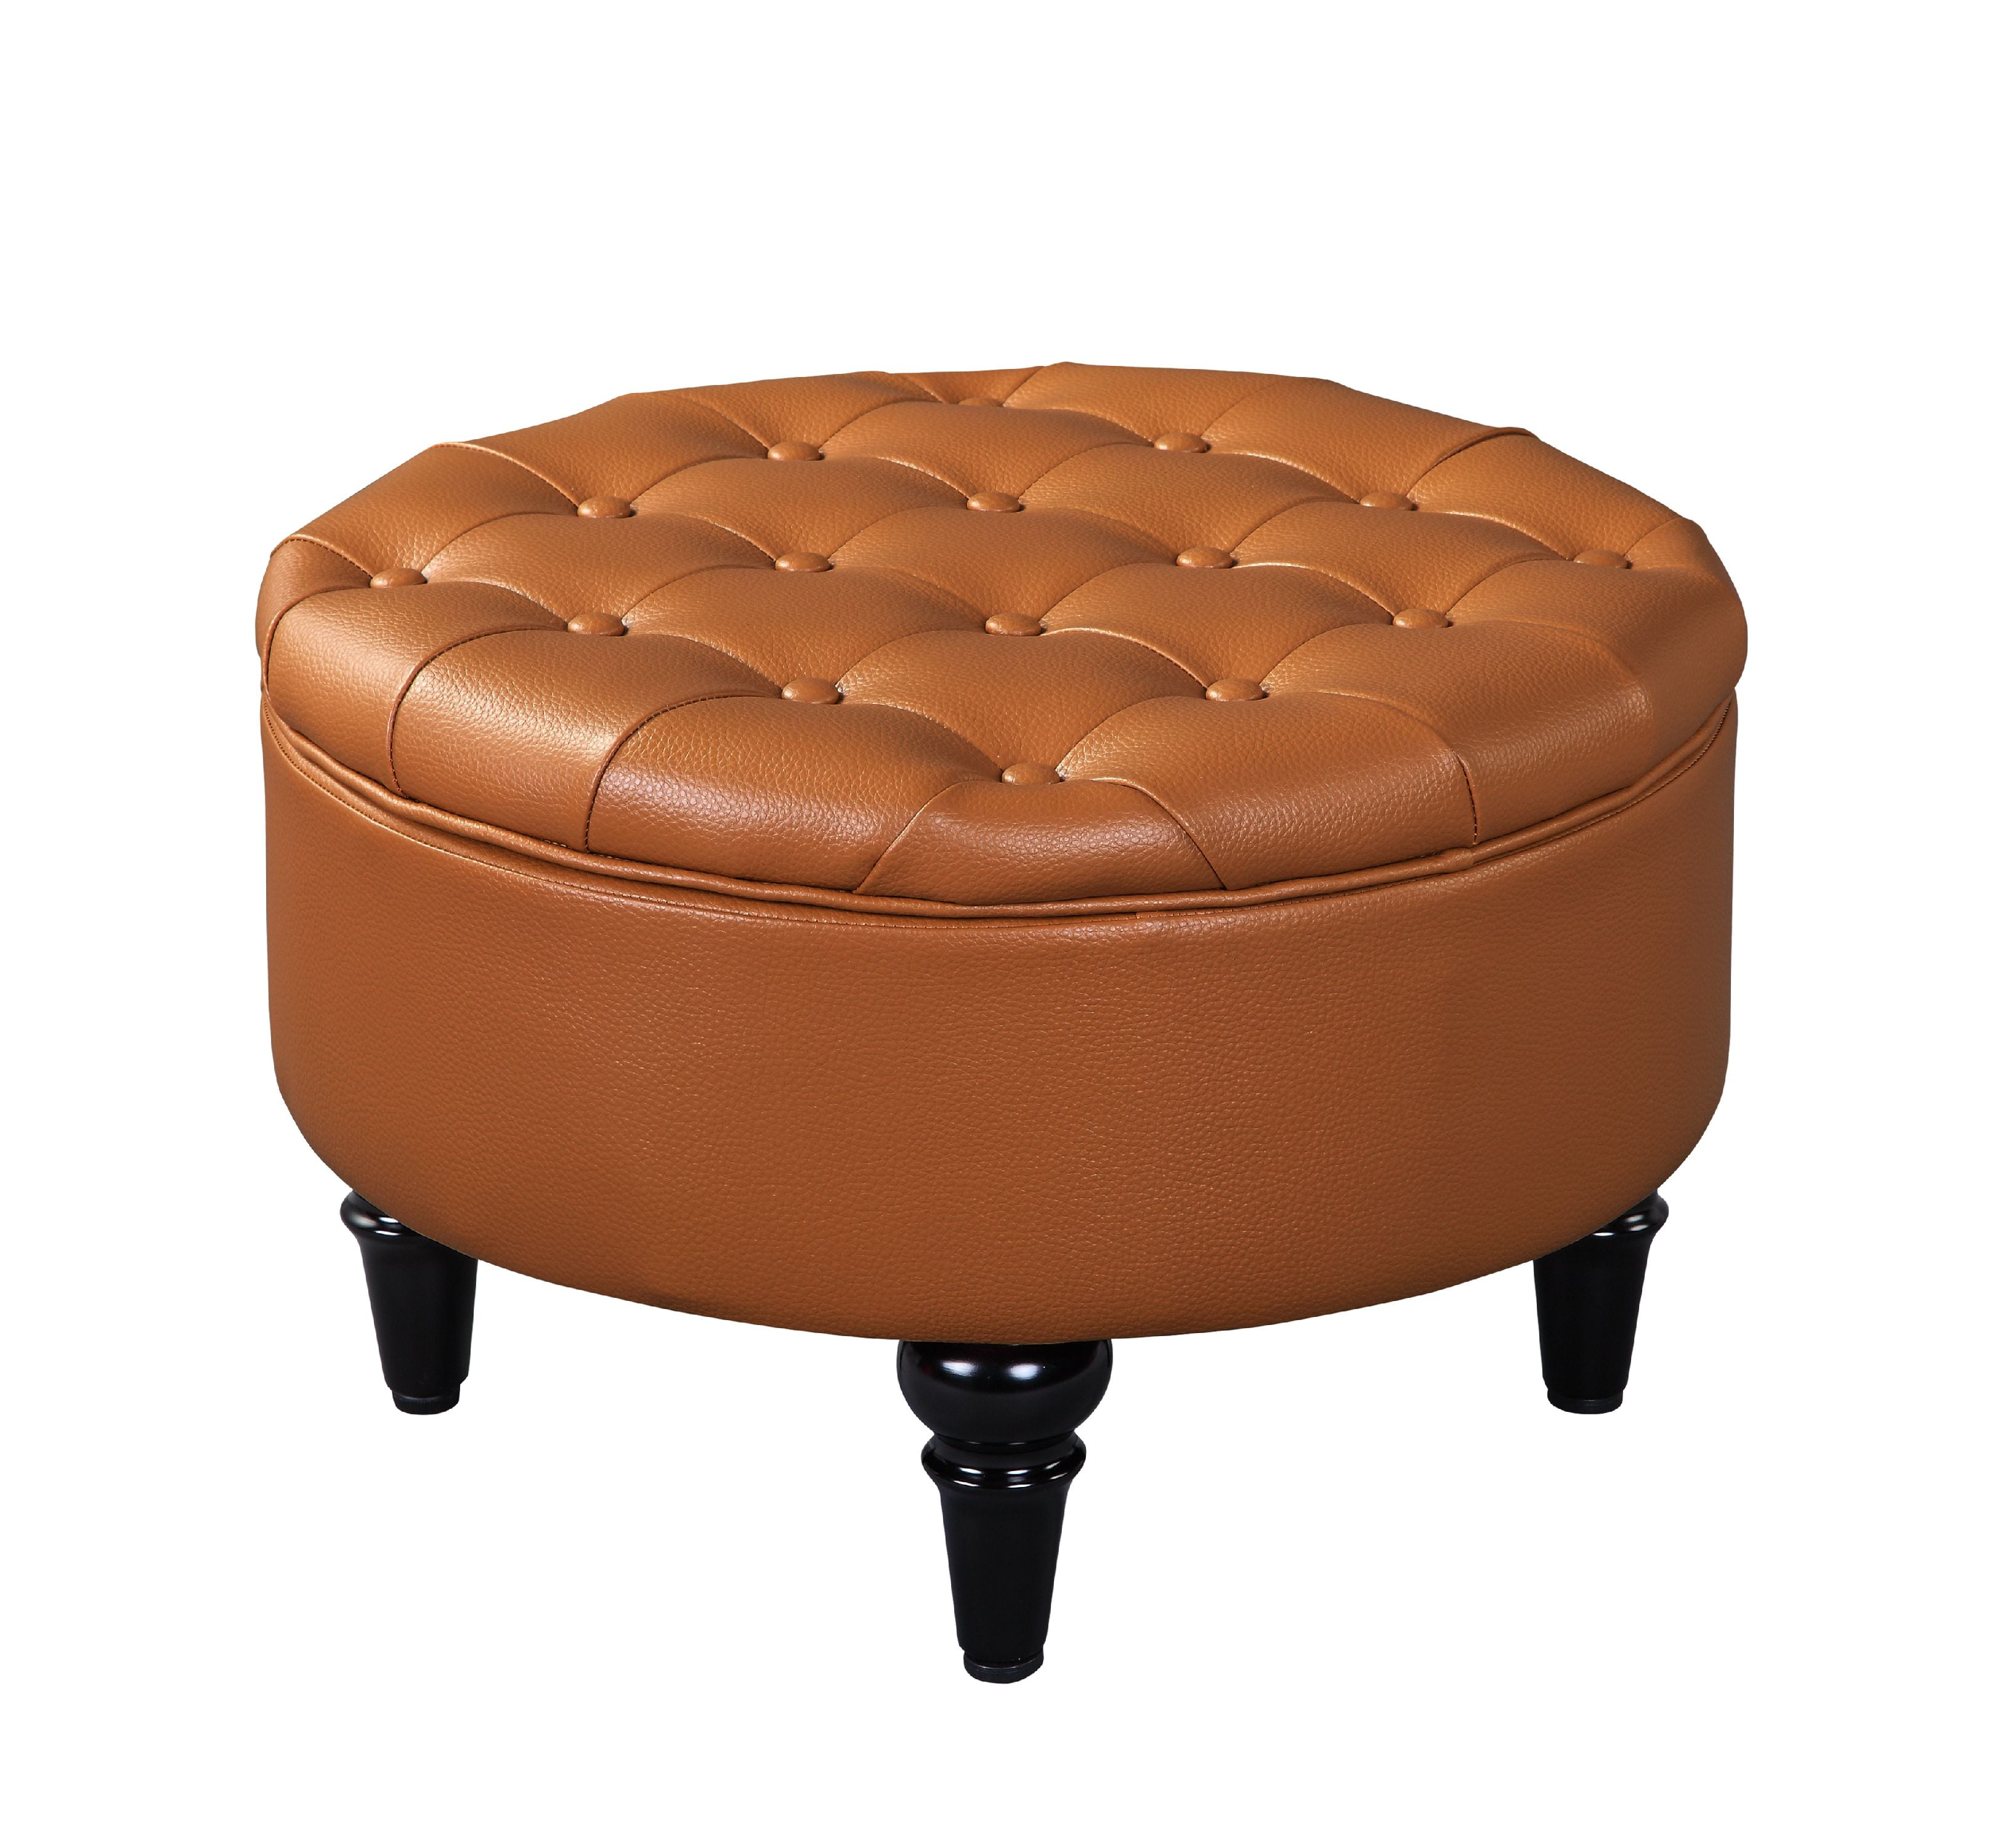 Round Storage Ottoman Footstool Brown, Round Leather Ottoman